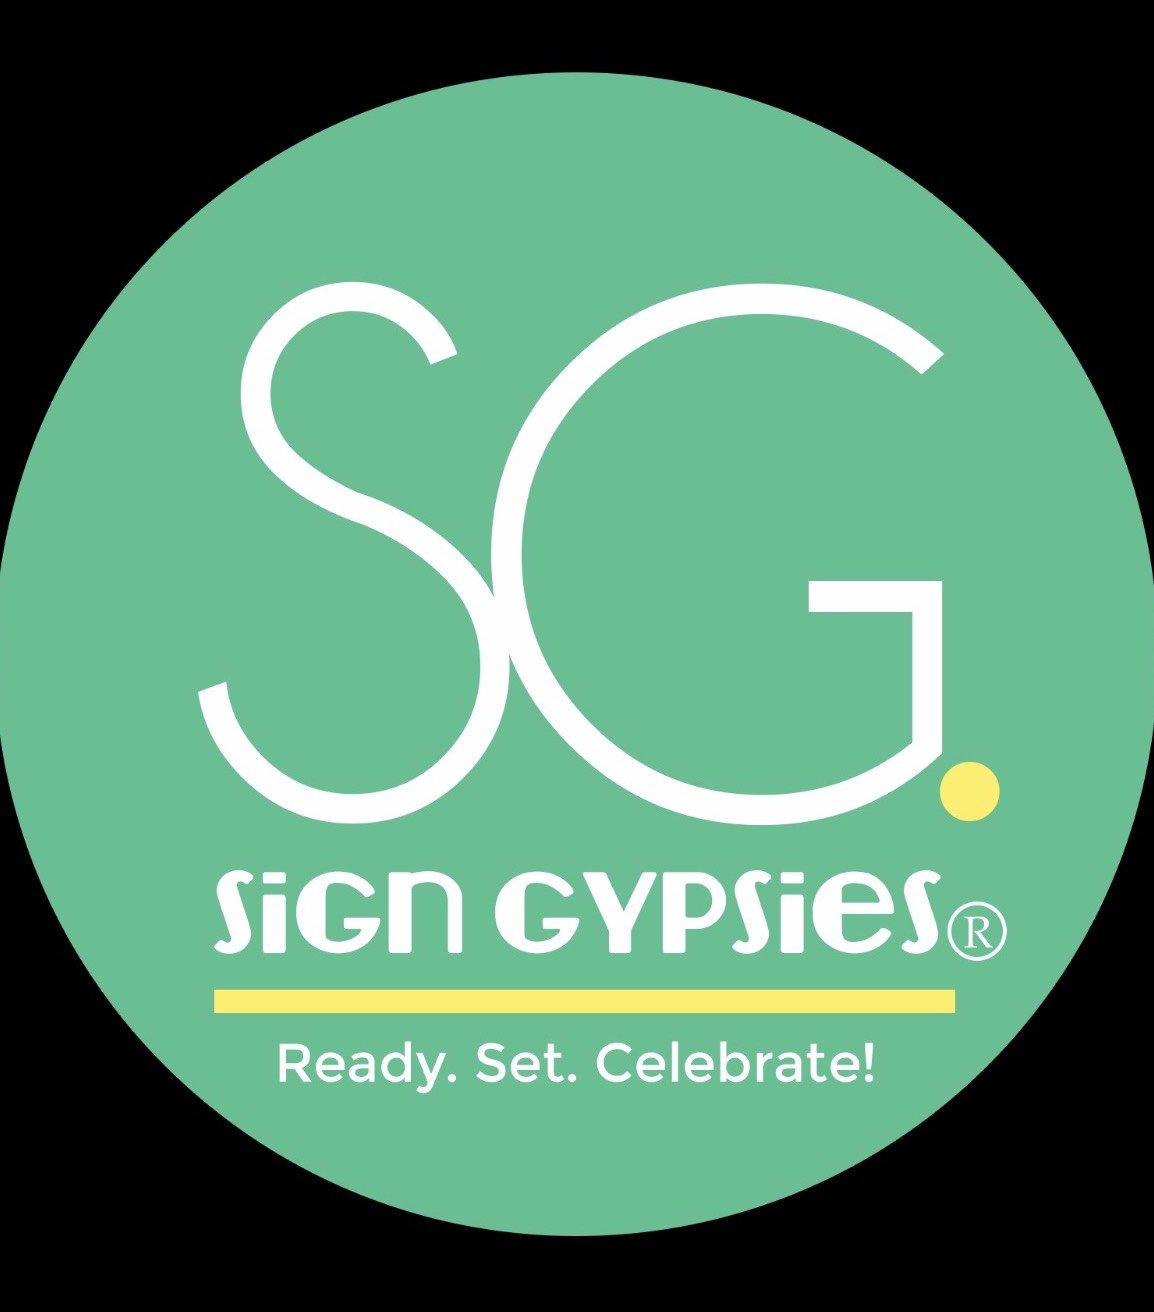 Sign Gypsies logo.JPG